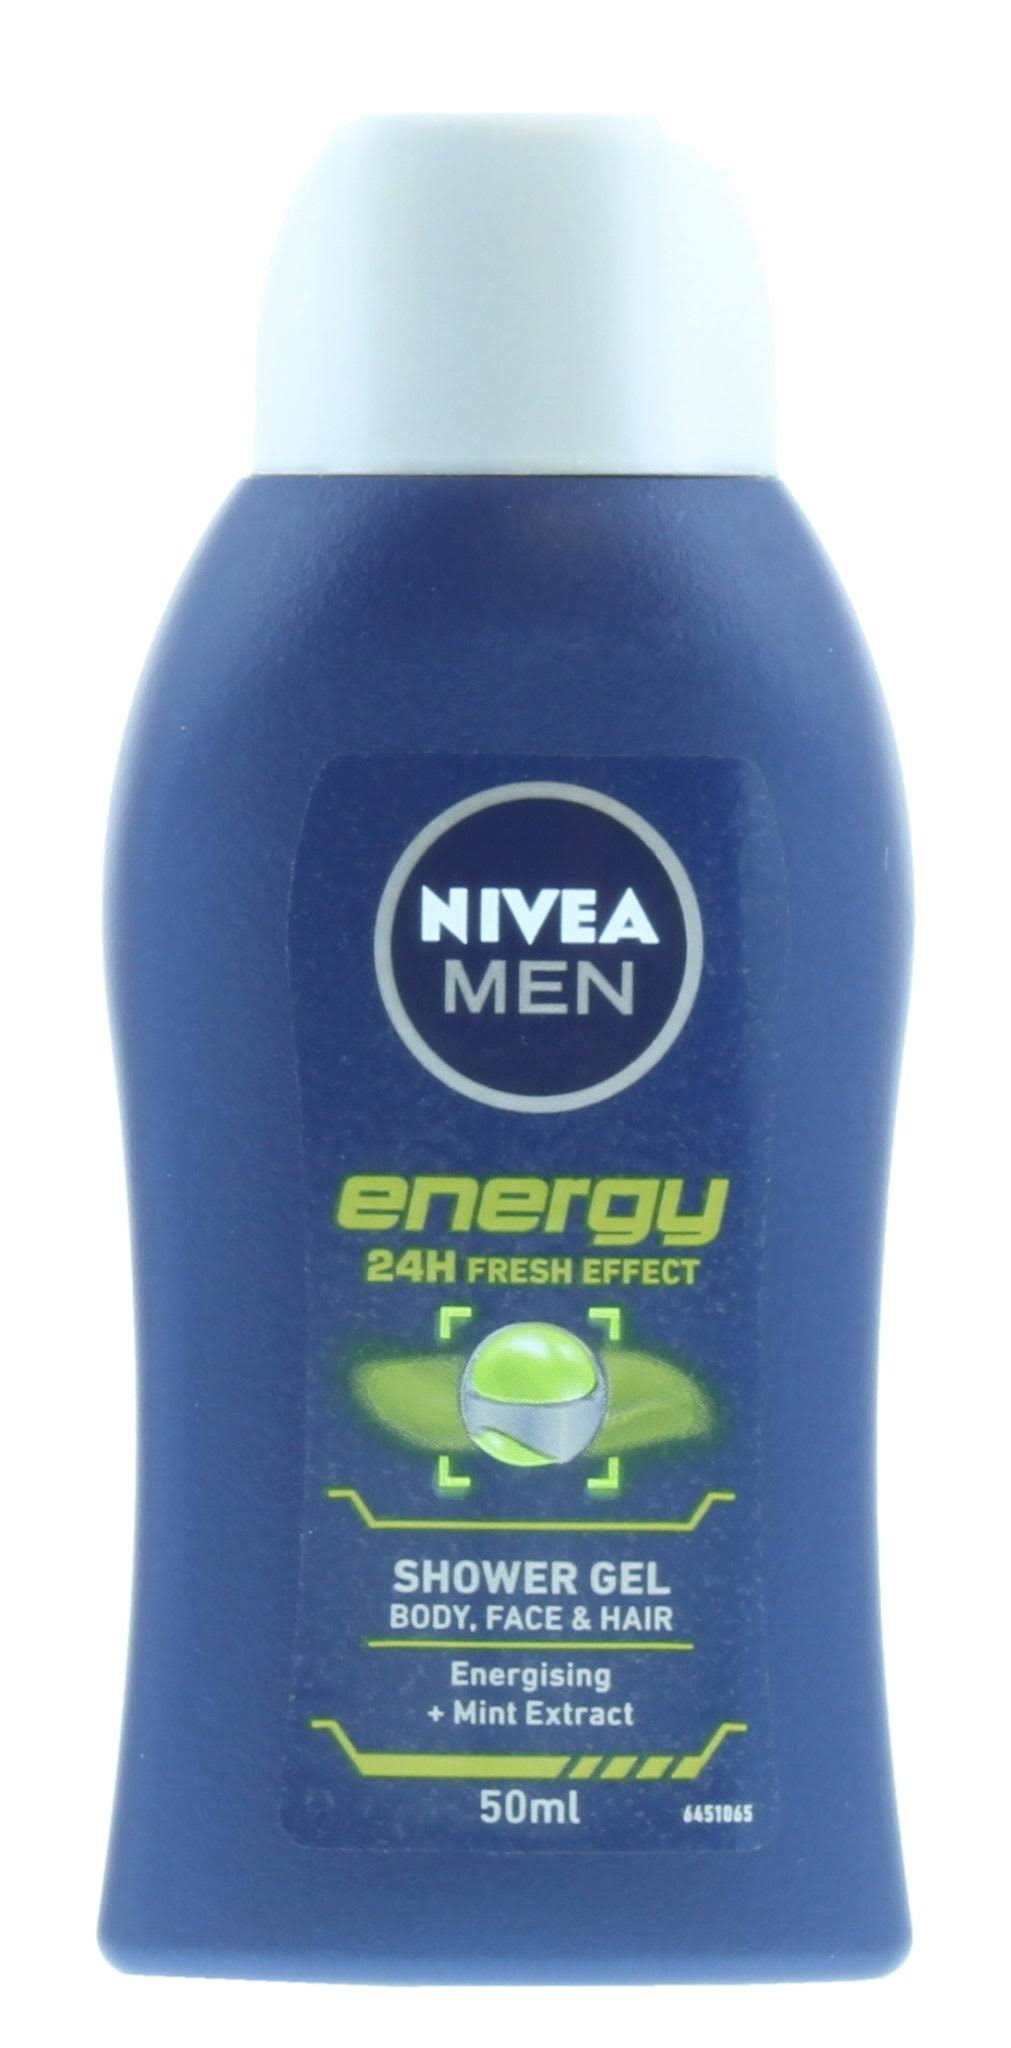 Nivea Men Shower Gel - Energy, Mint Extract, 50ml